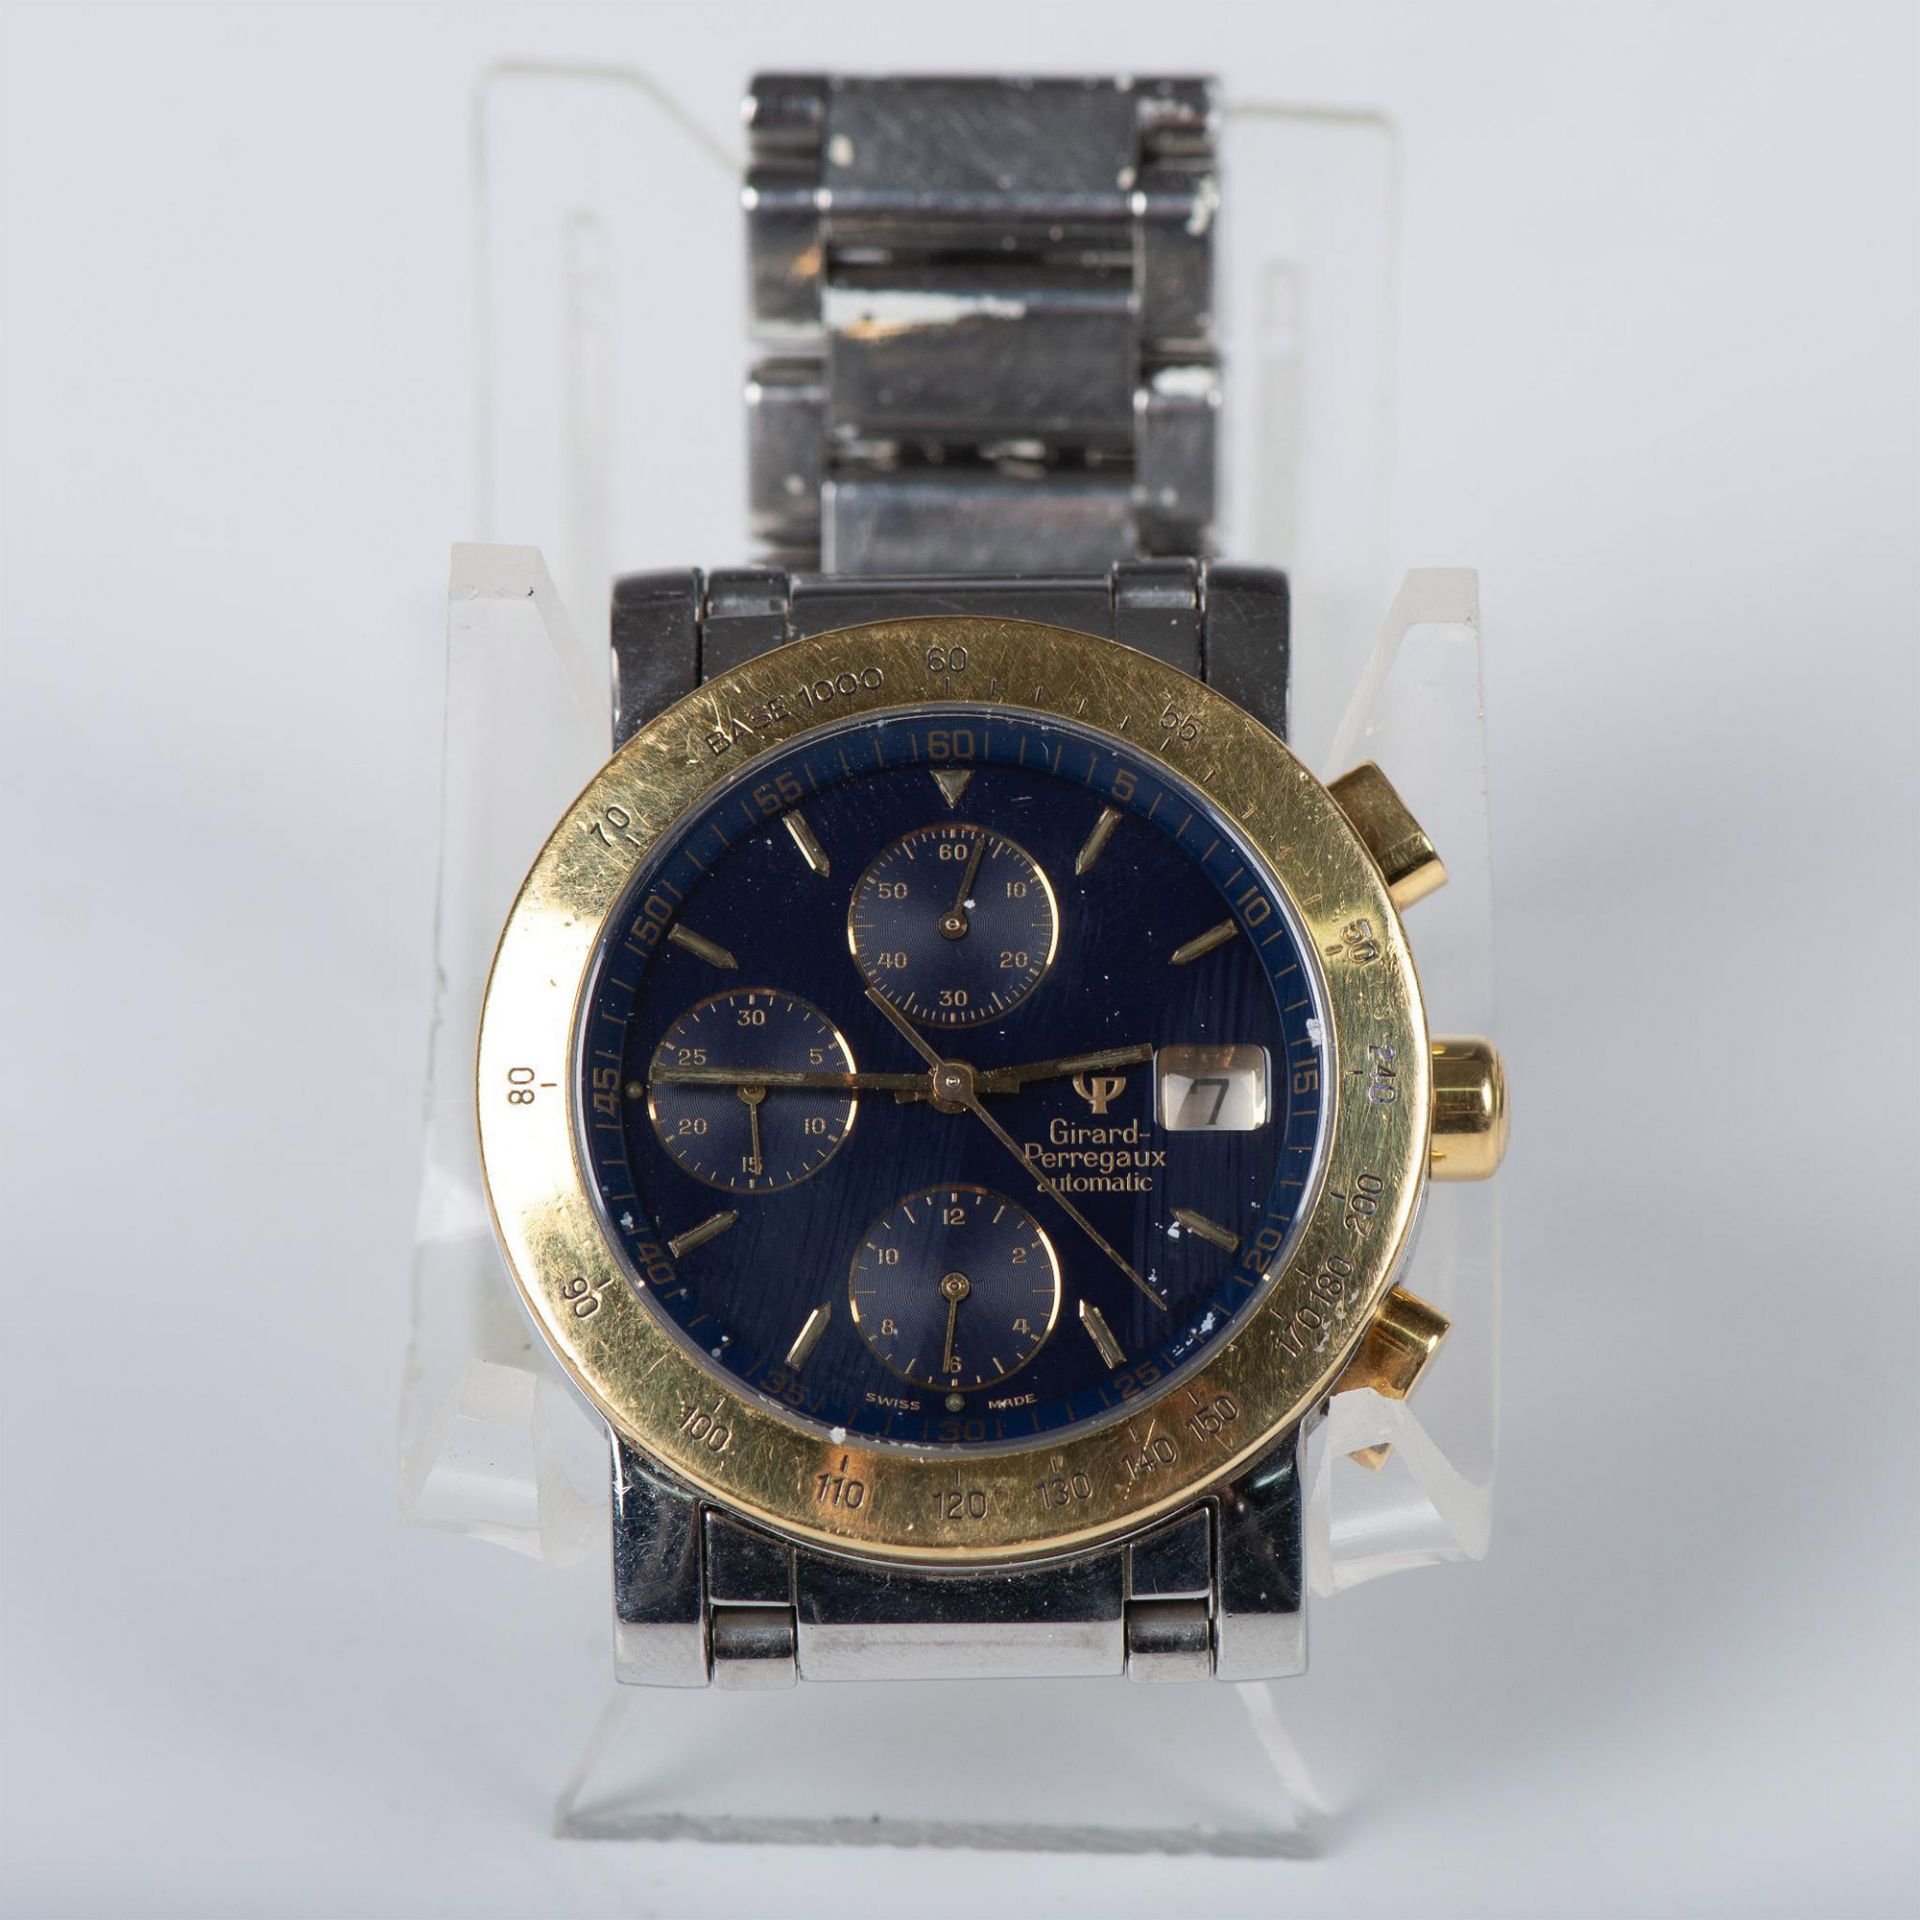 Girard Perregaux 7000 Chrono Automatic Men's Watch - Image 3 of 11